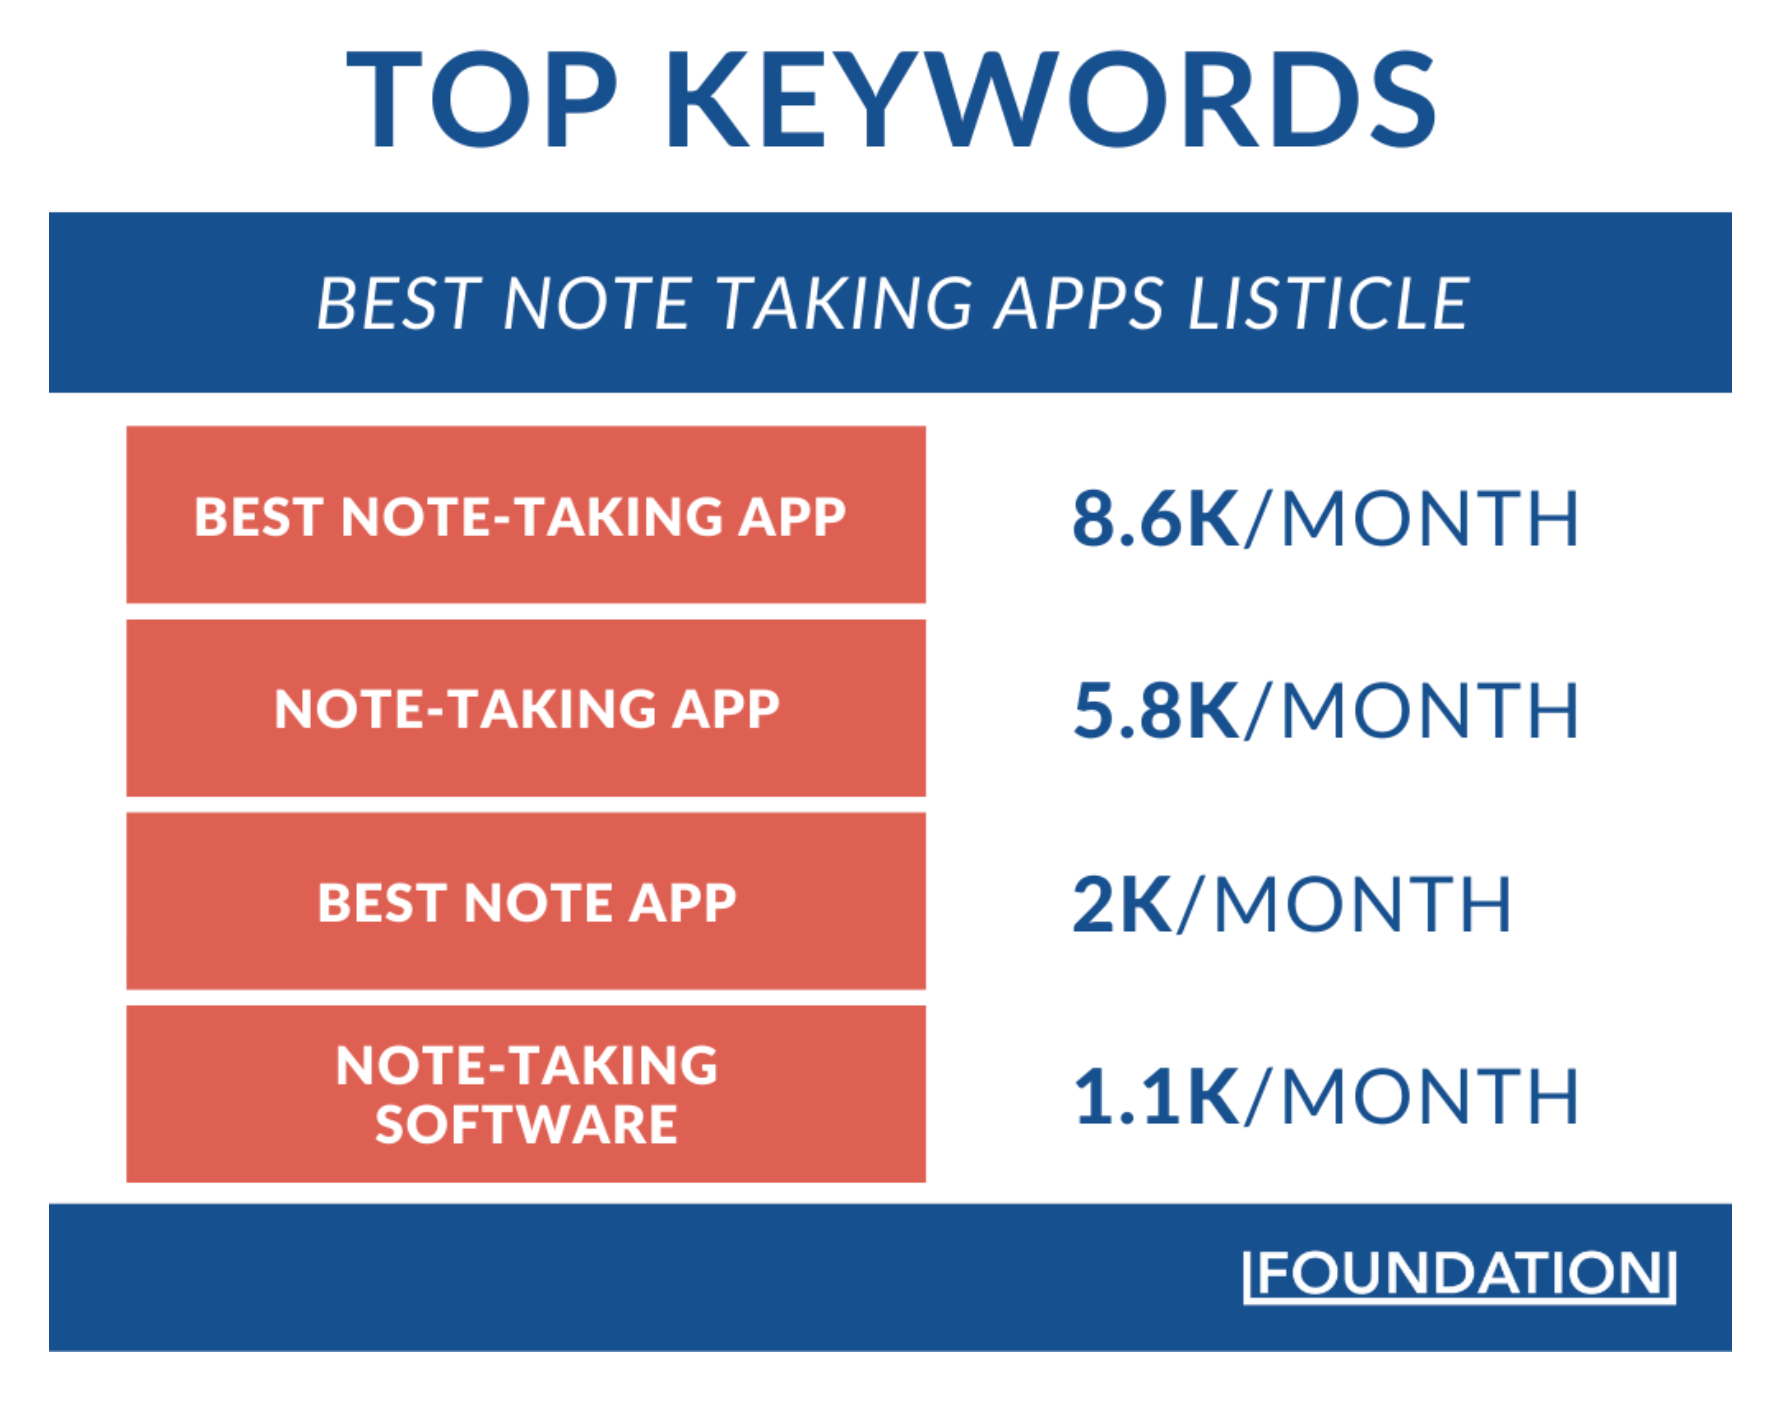 Zapier Best Note Taking App Keywords